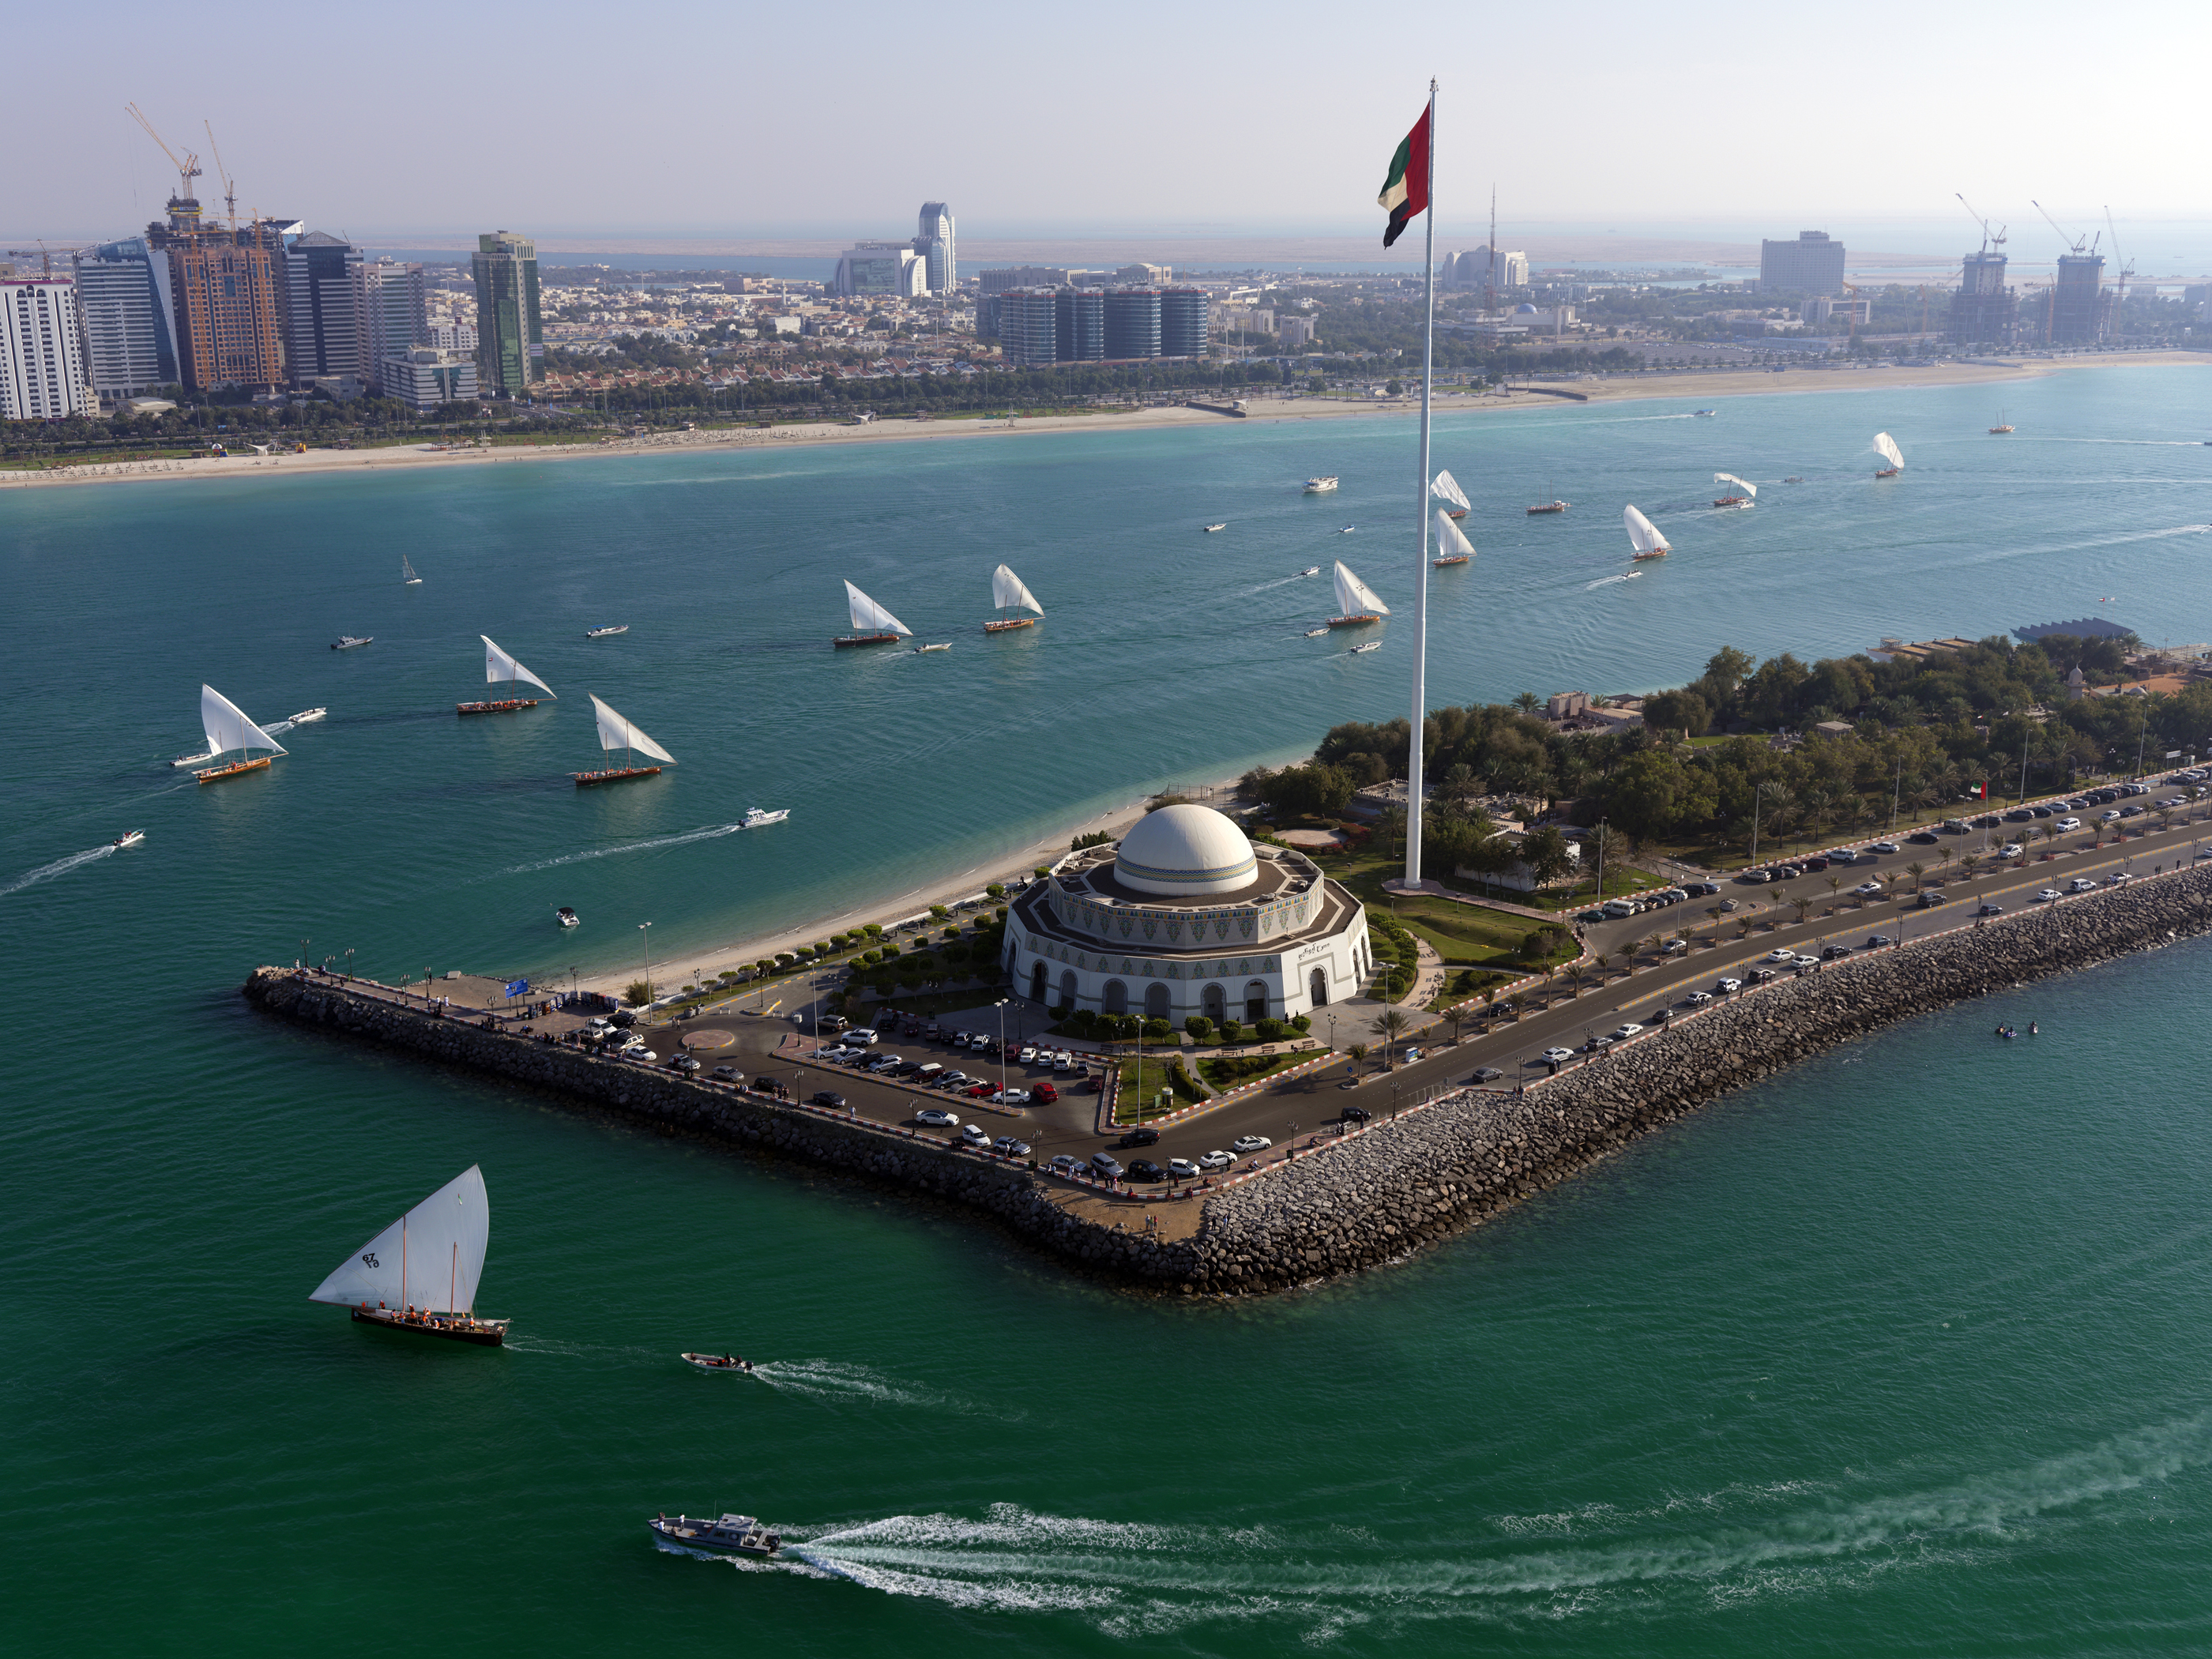 Breakwater Island - Abu Dhabi